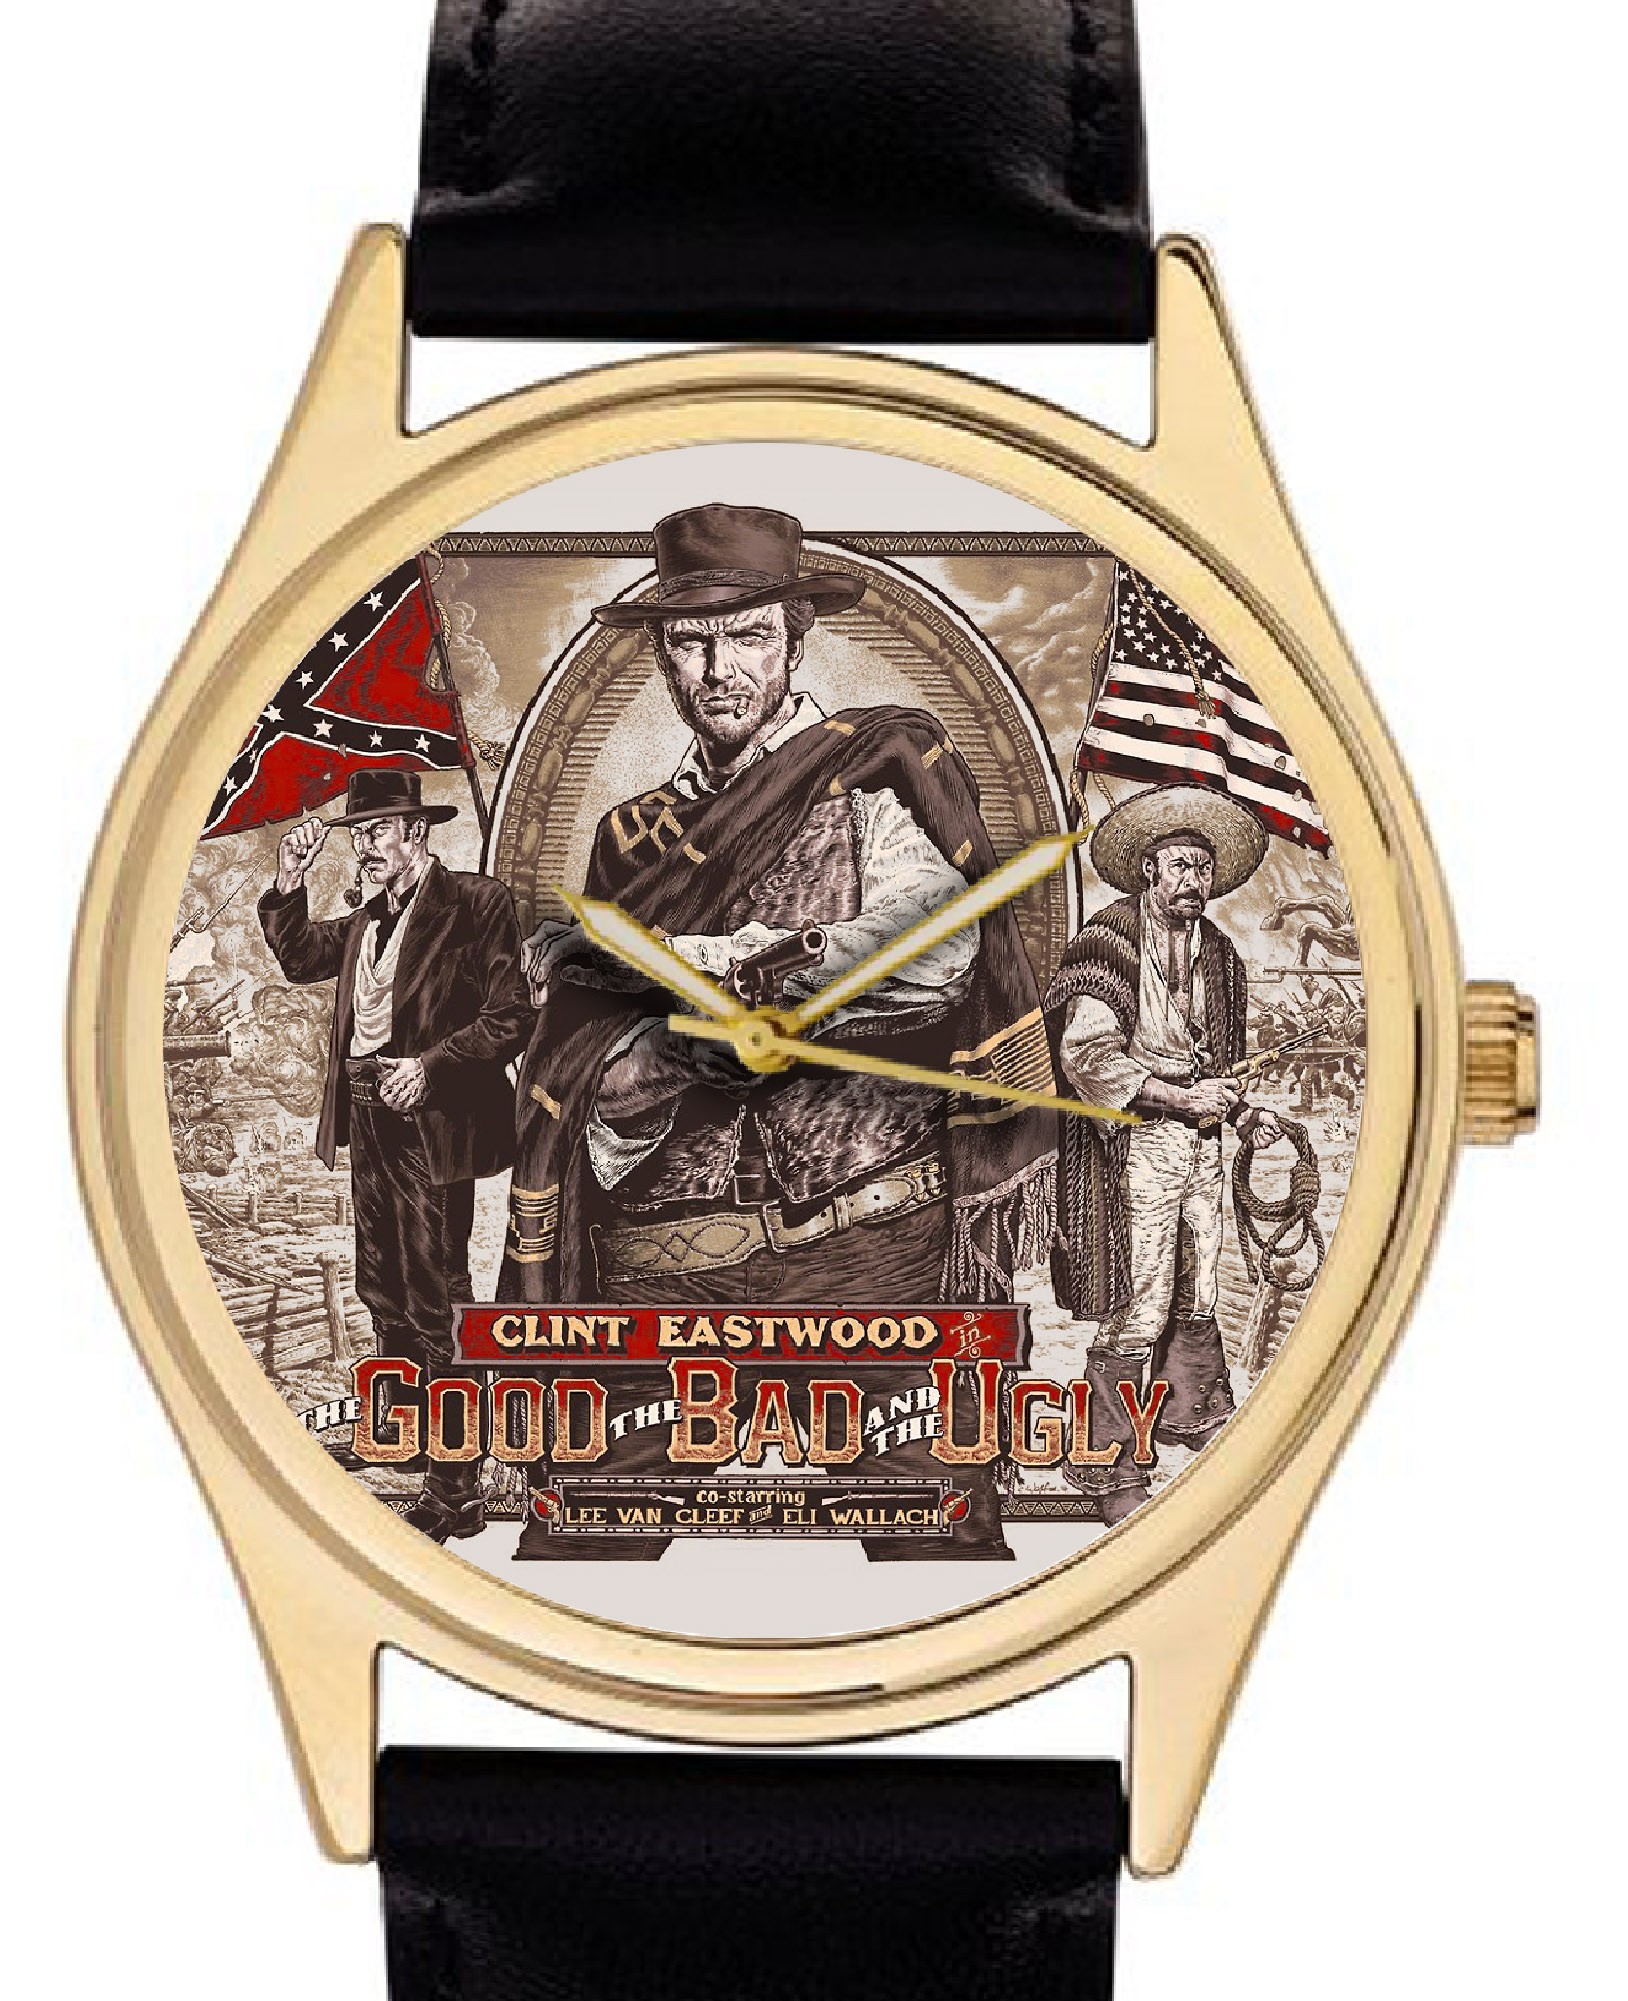 Ugly watch becomes pretty watch | WatchUSeek Watch Forums